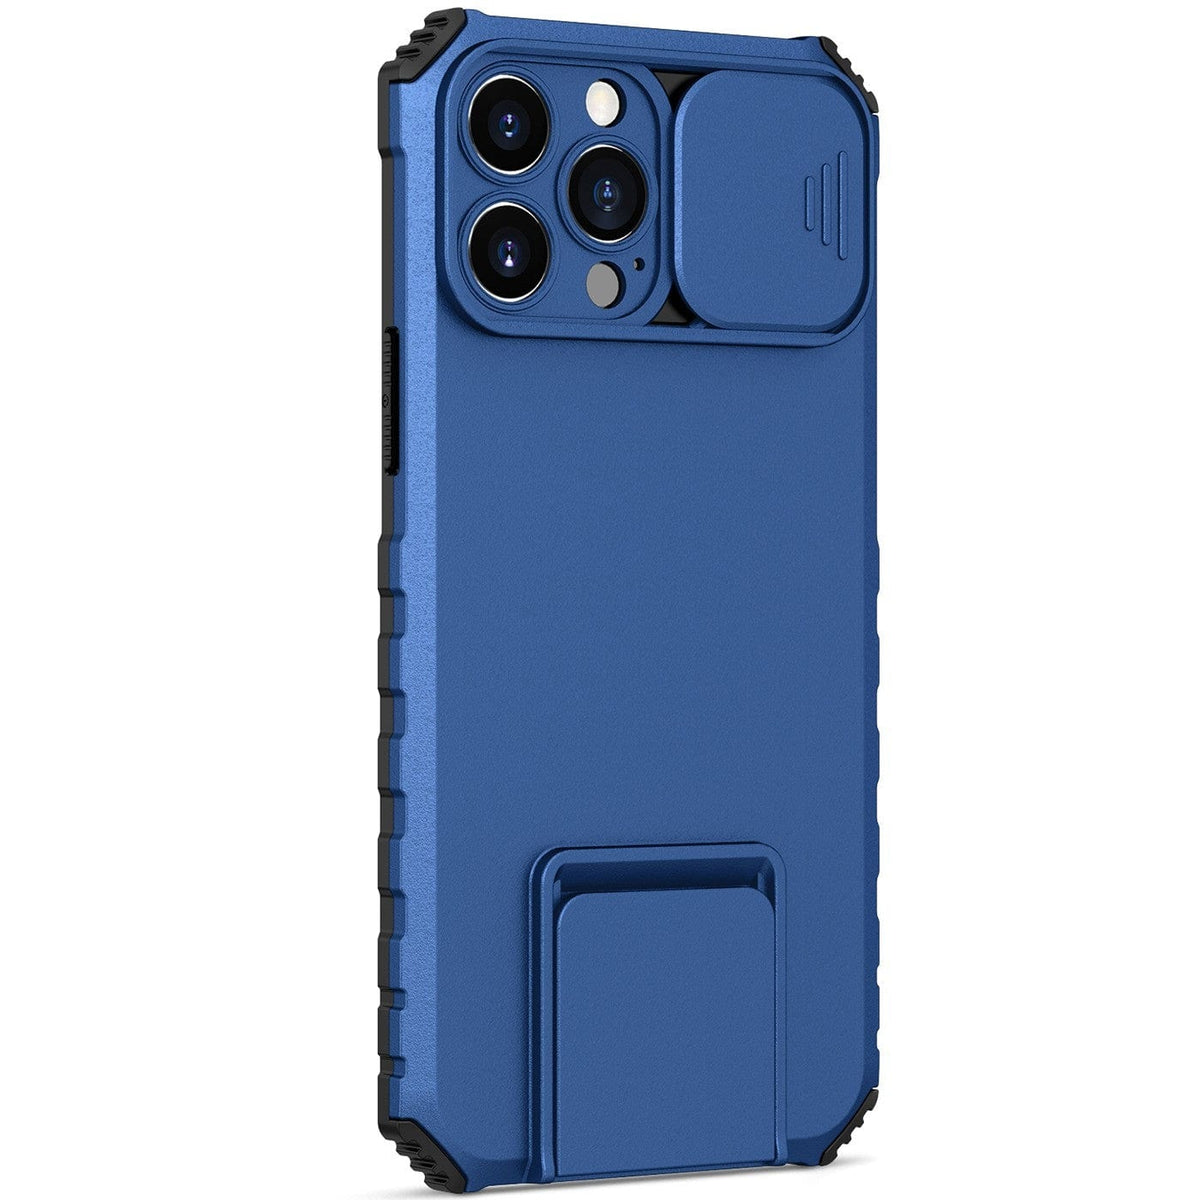 Husa Defender cu Stand pentru Samsung Galaxy A53 5G, Albastru, Suport reglabil, Antisoc, Protectie glisanta pentru camera